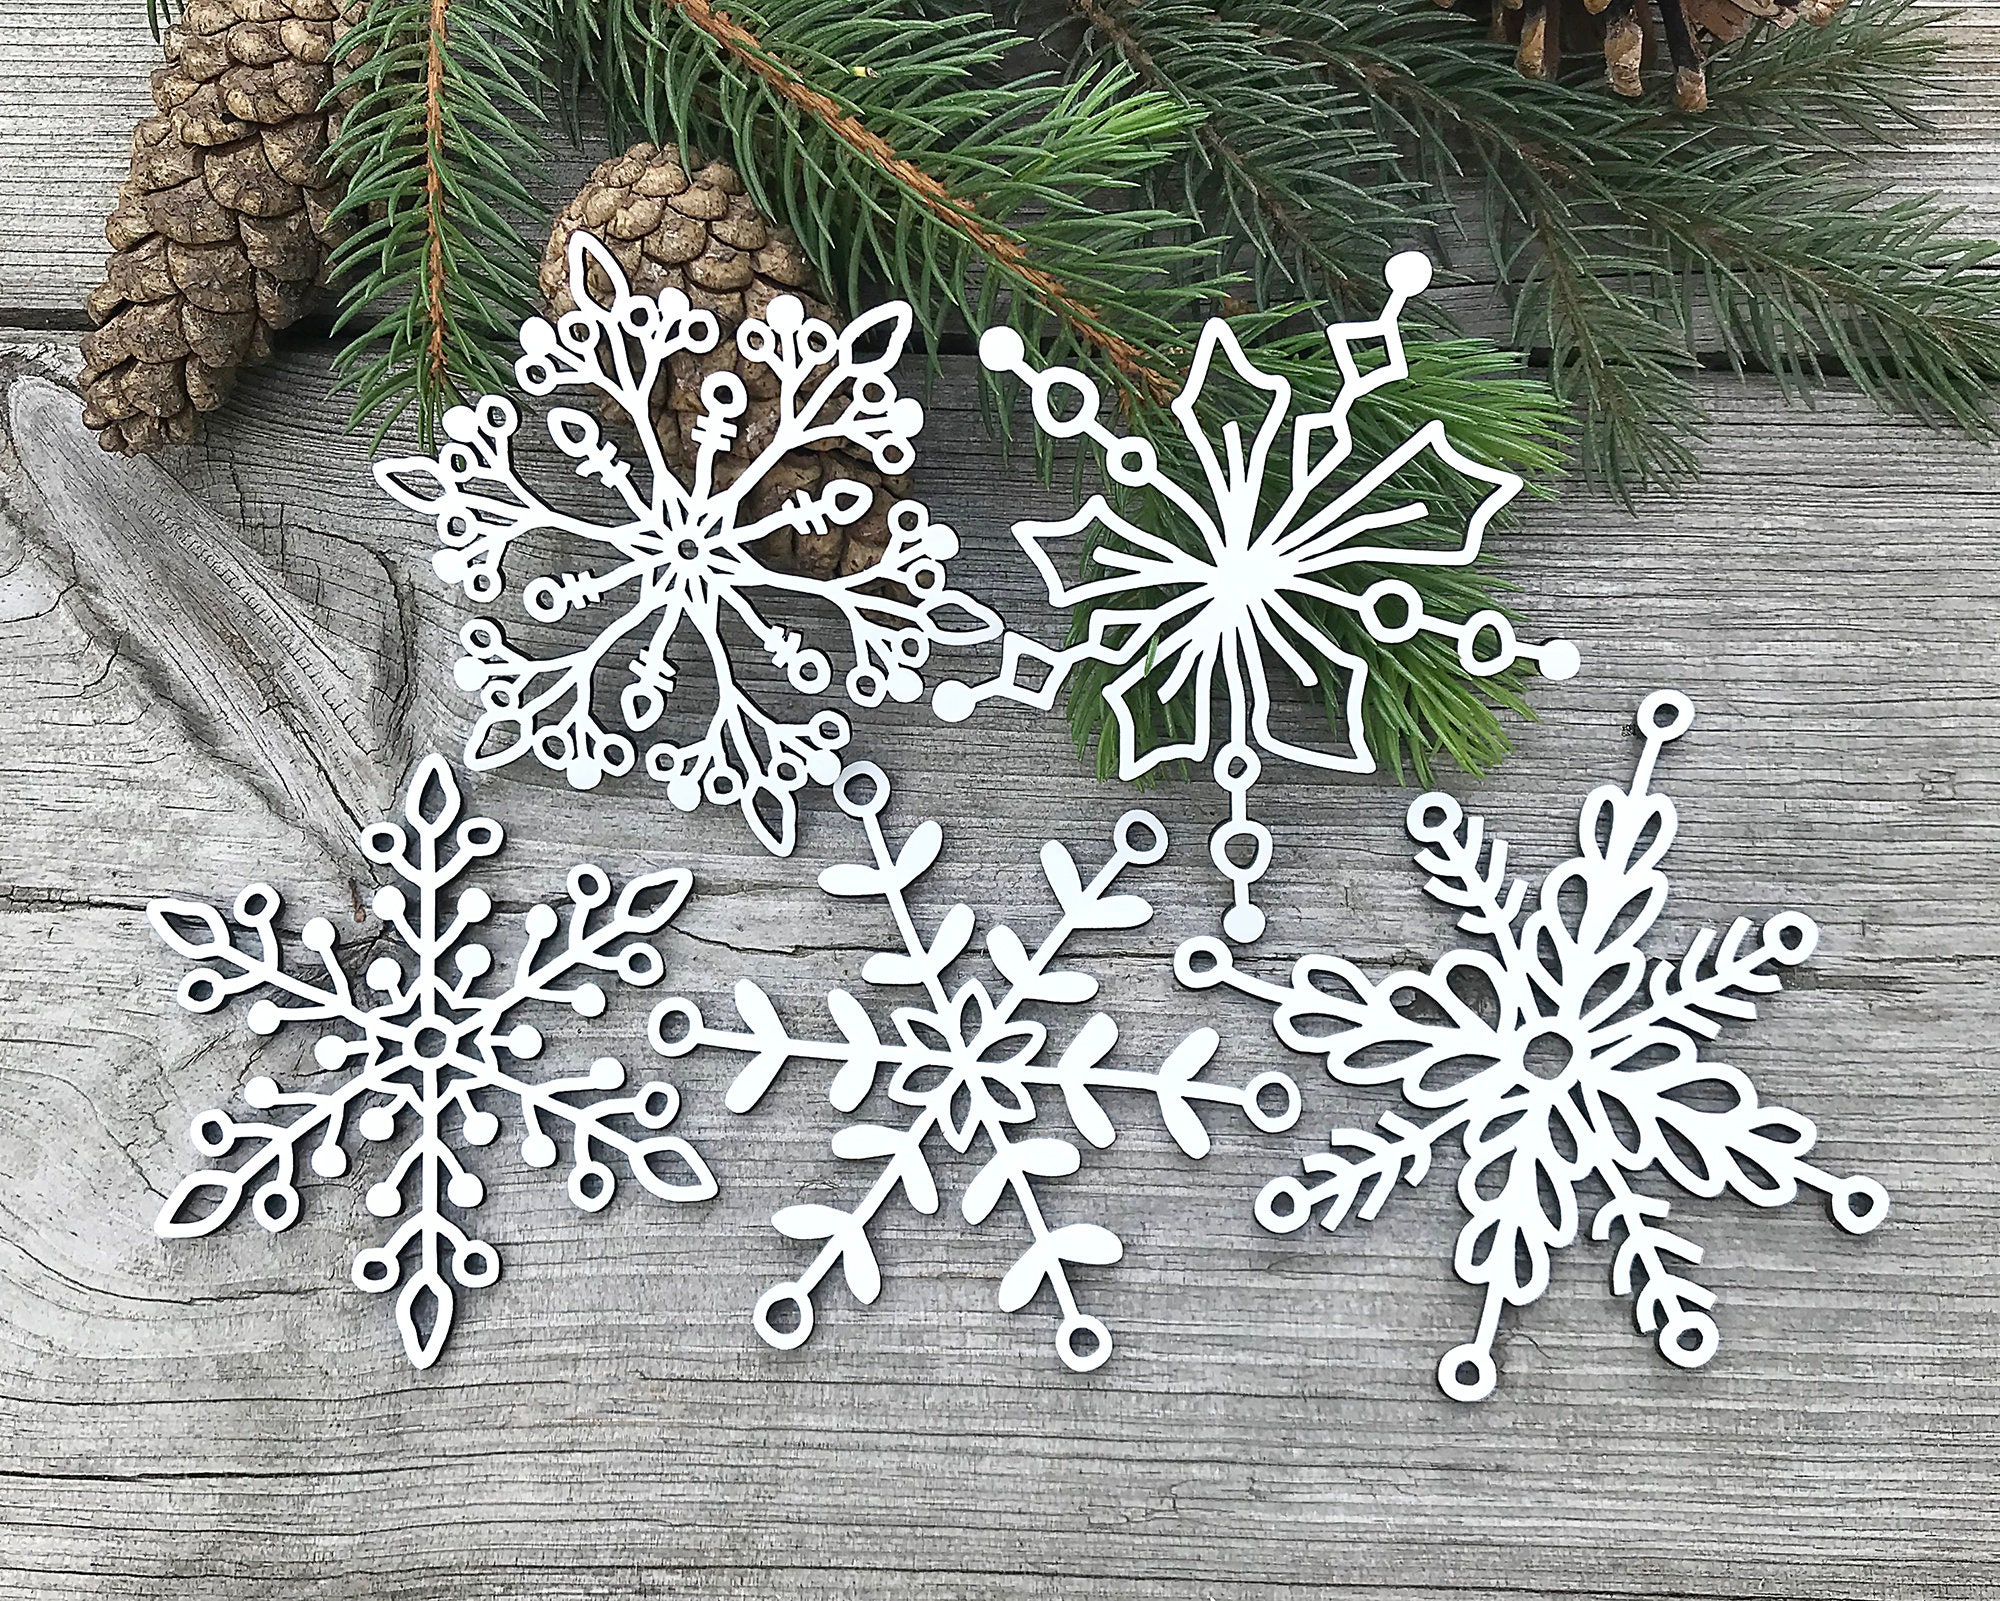 D-groee 1 Set Snowflakes Outdoor Christmas Ornaments Foam Snowflakes Decorations Christmas Ornaments Snowflake Window Hanging Decorations, Infant